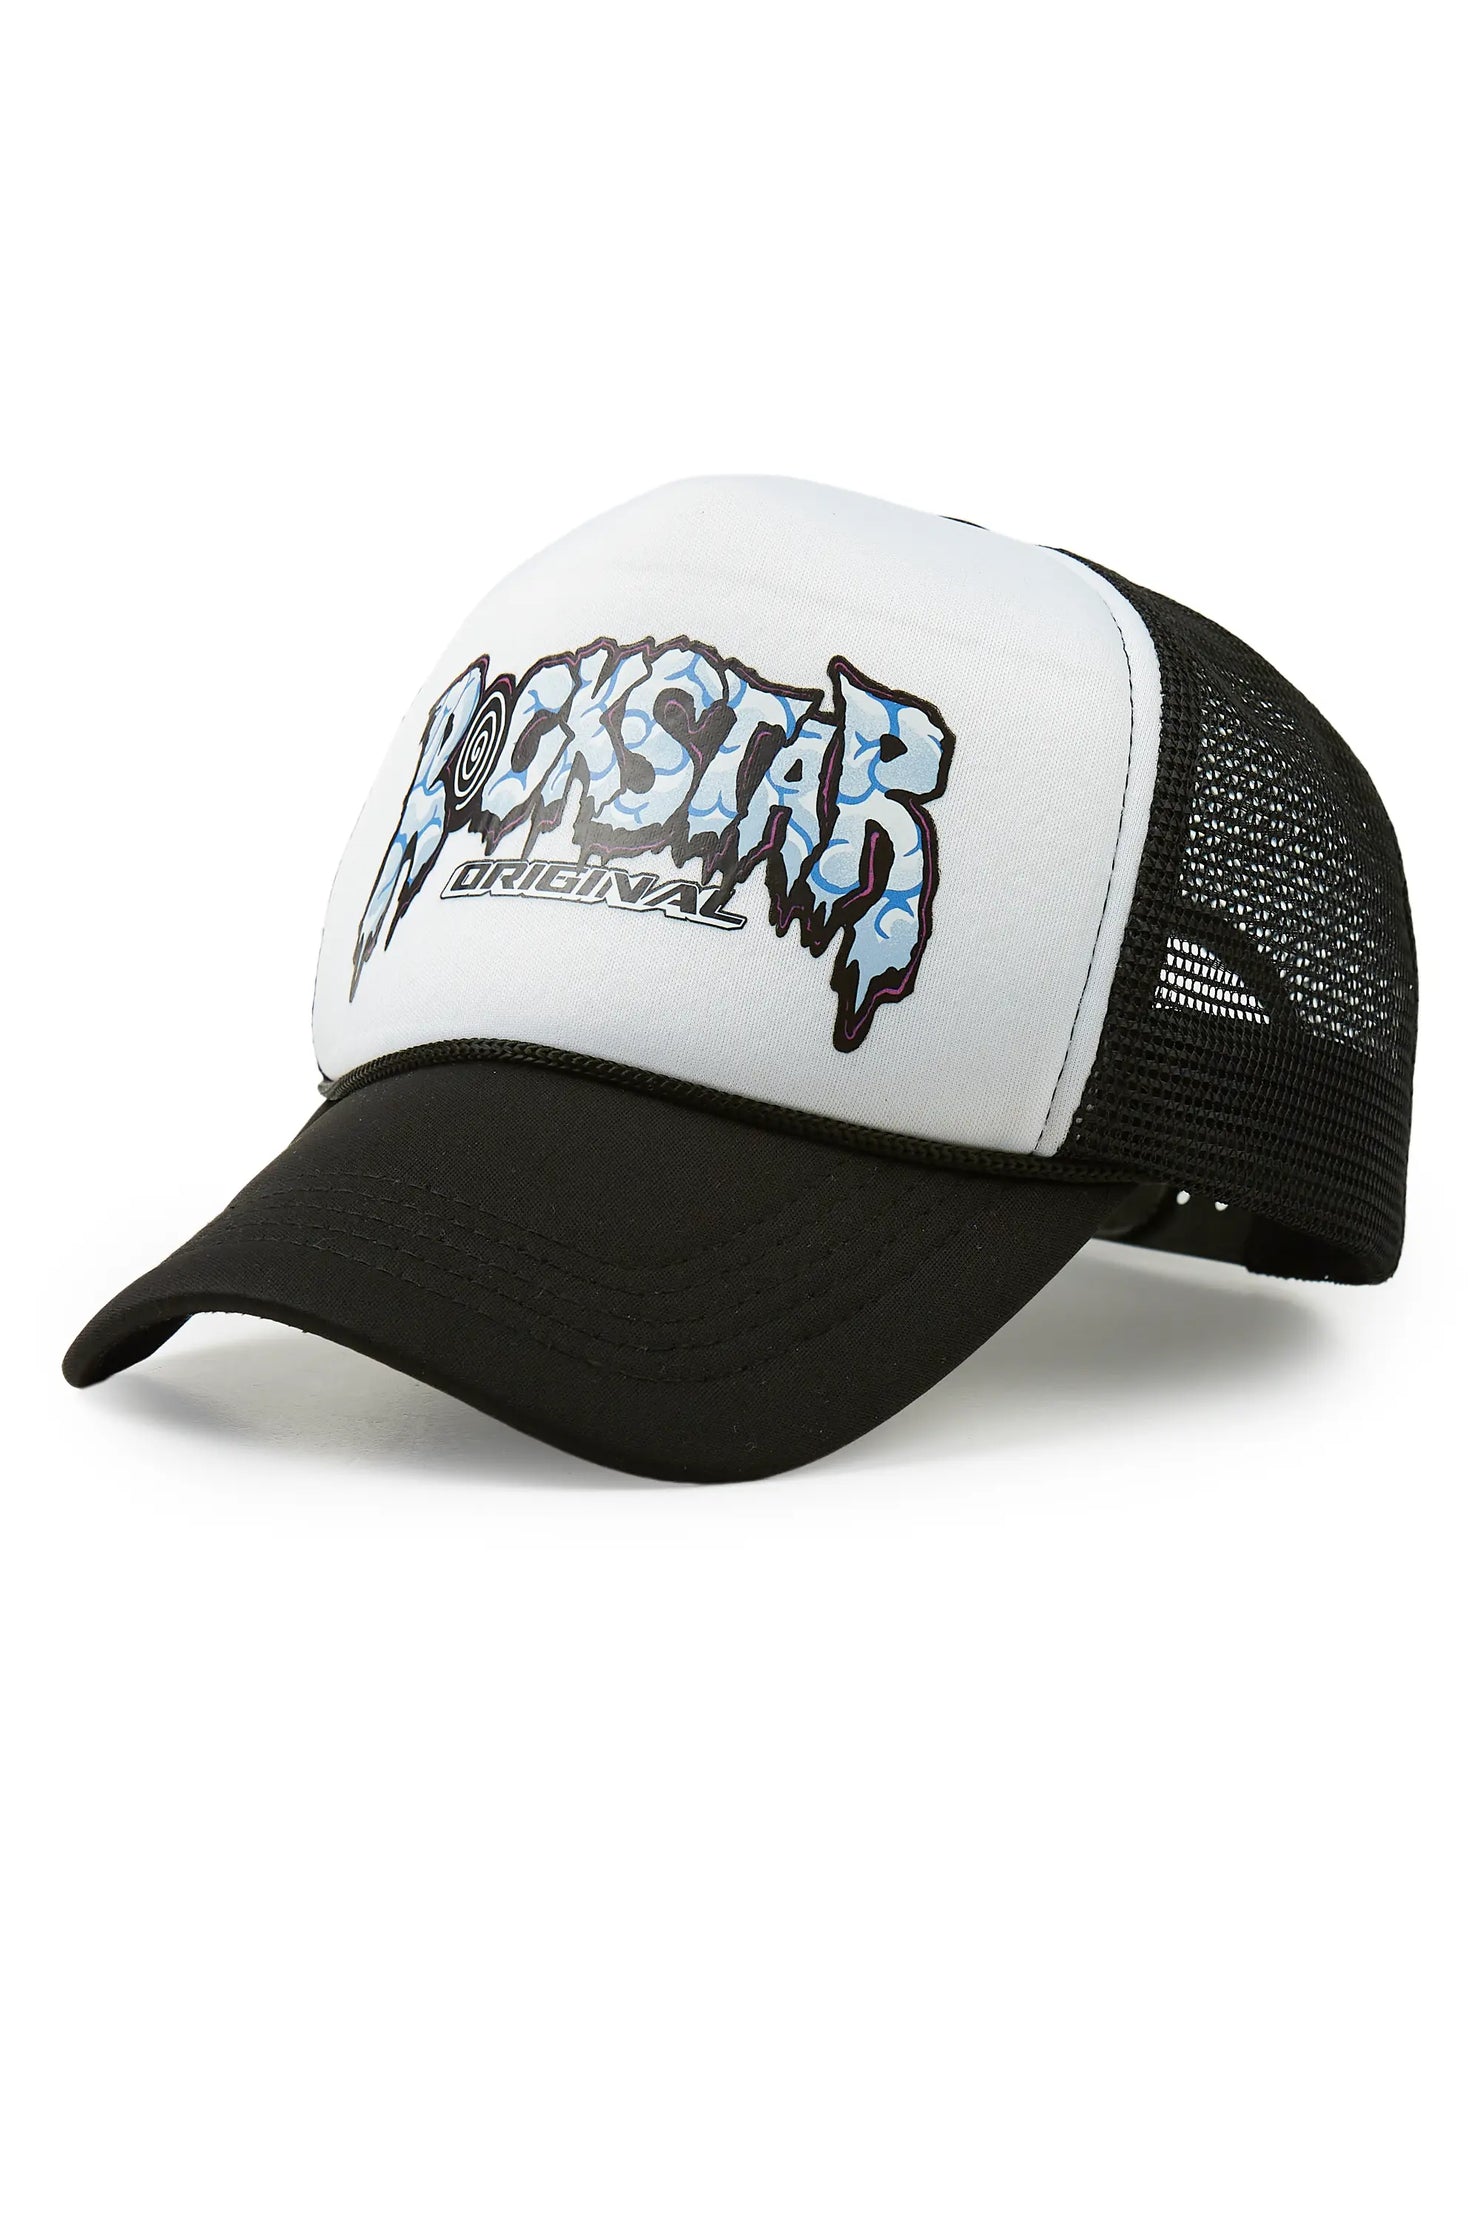 Geek Skull White/Black Trucker Hat– Rockstar Original